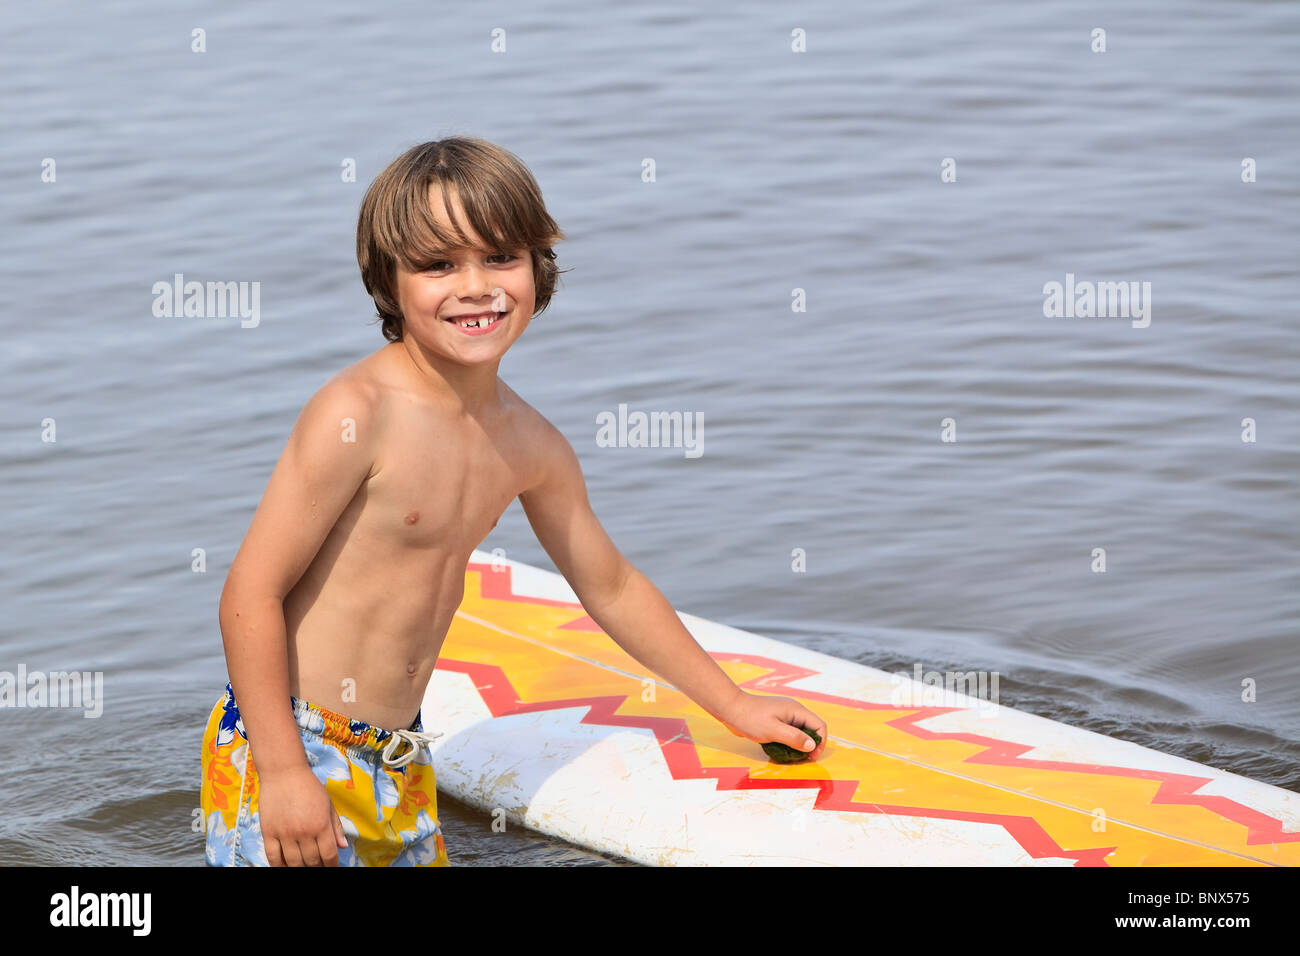 Young boy playing with surfboard on Lake Winnipeg, Gimli, Manitoba, Canada. Stock Photo